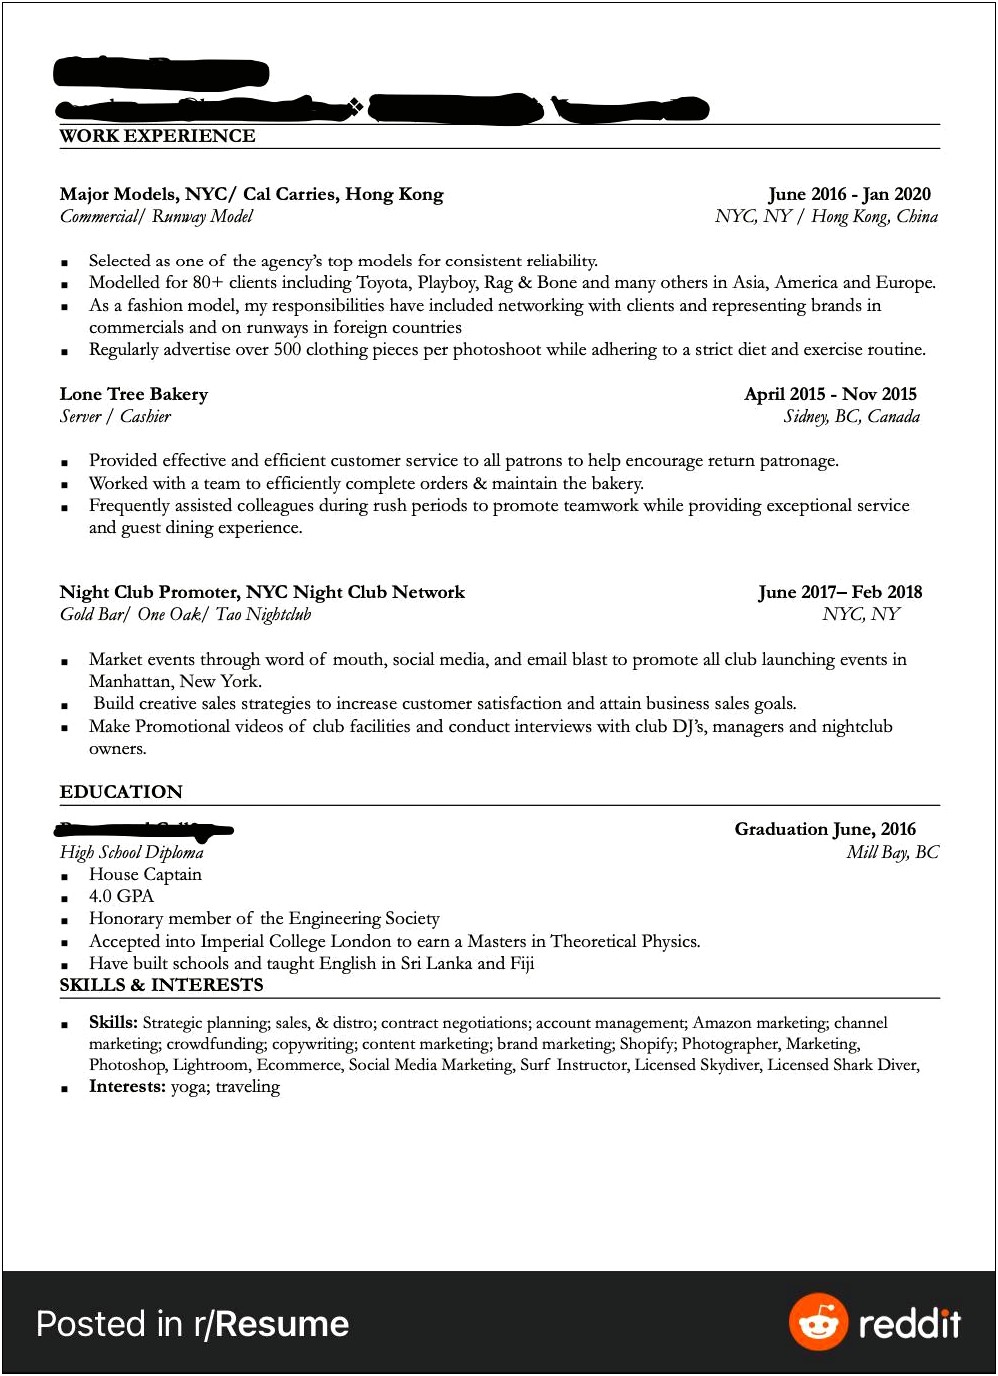 Club Promoter Job Description Resume